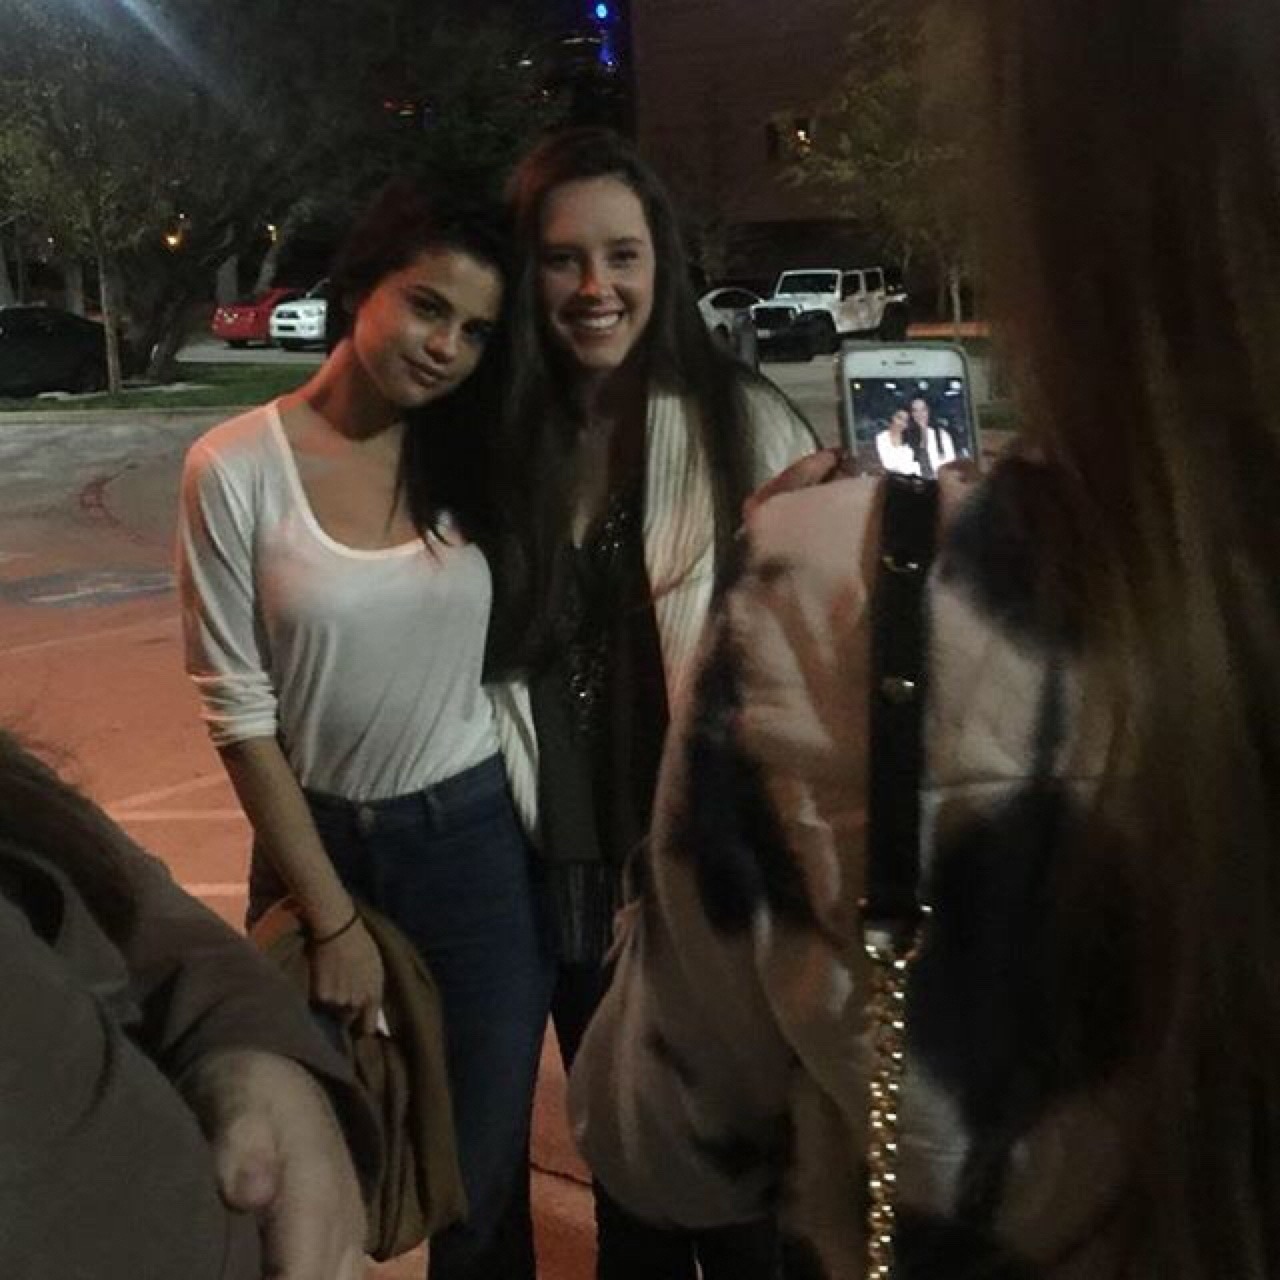 @btus_biggest_fann: When you run into Selena Gomez in Dallas 😳😳😳 #WTF #OMG #SelenaGomez #HellsBells #HolidaysWithBells #Dallas